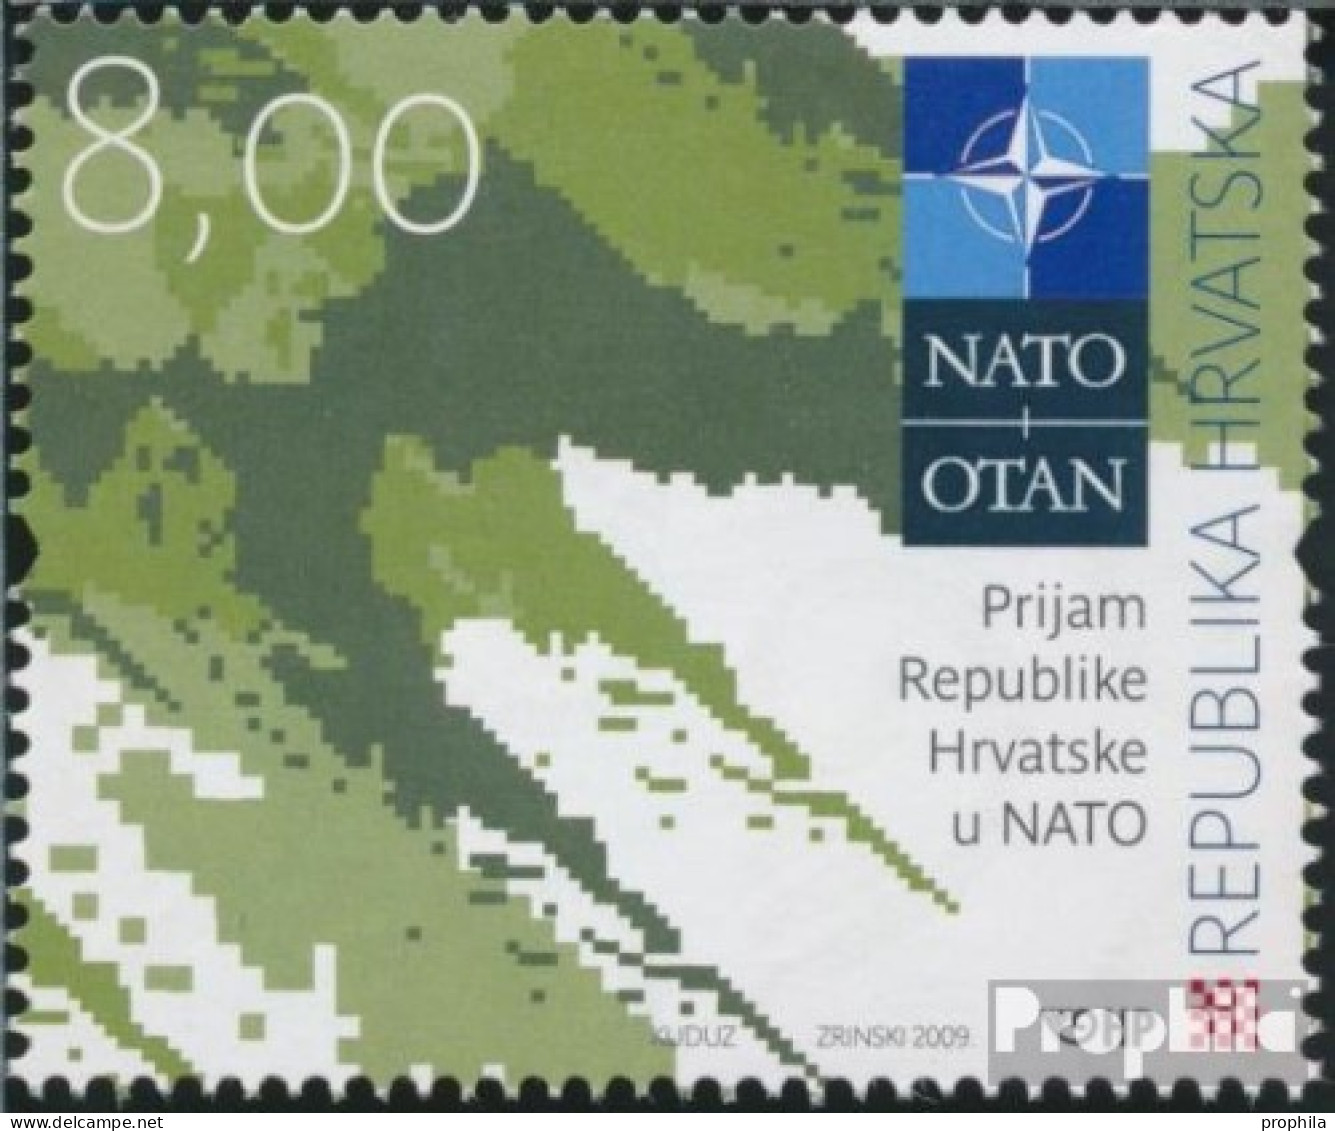 Kroatien 900 (kompl.Ausg.) Postfrisch 2009 Kroatien In Die NATO - Kroatien